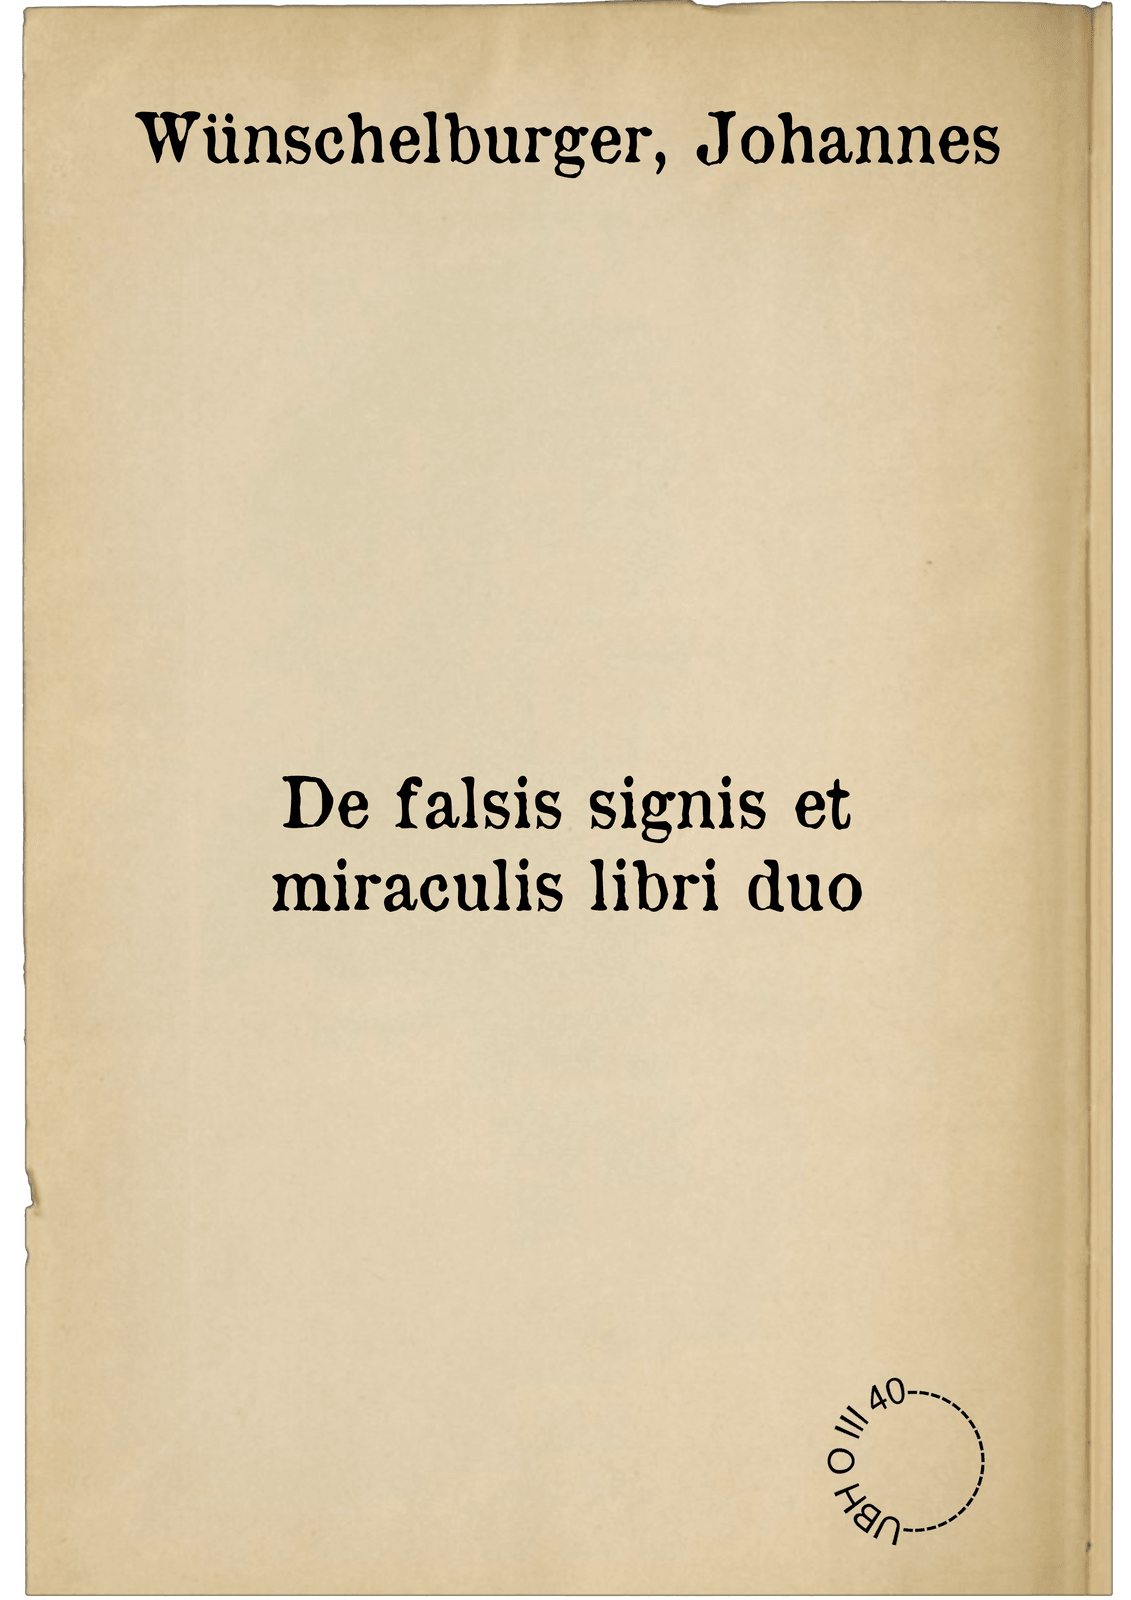 De falsis signis et miraculis libri duo